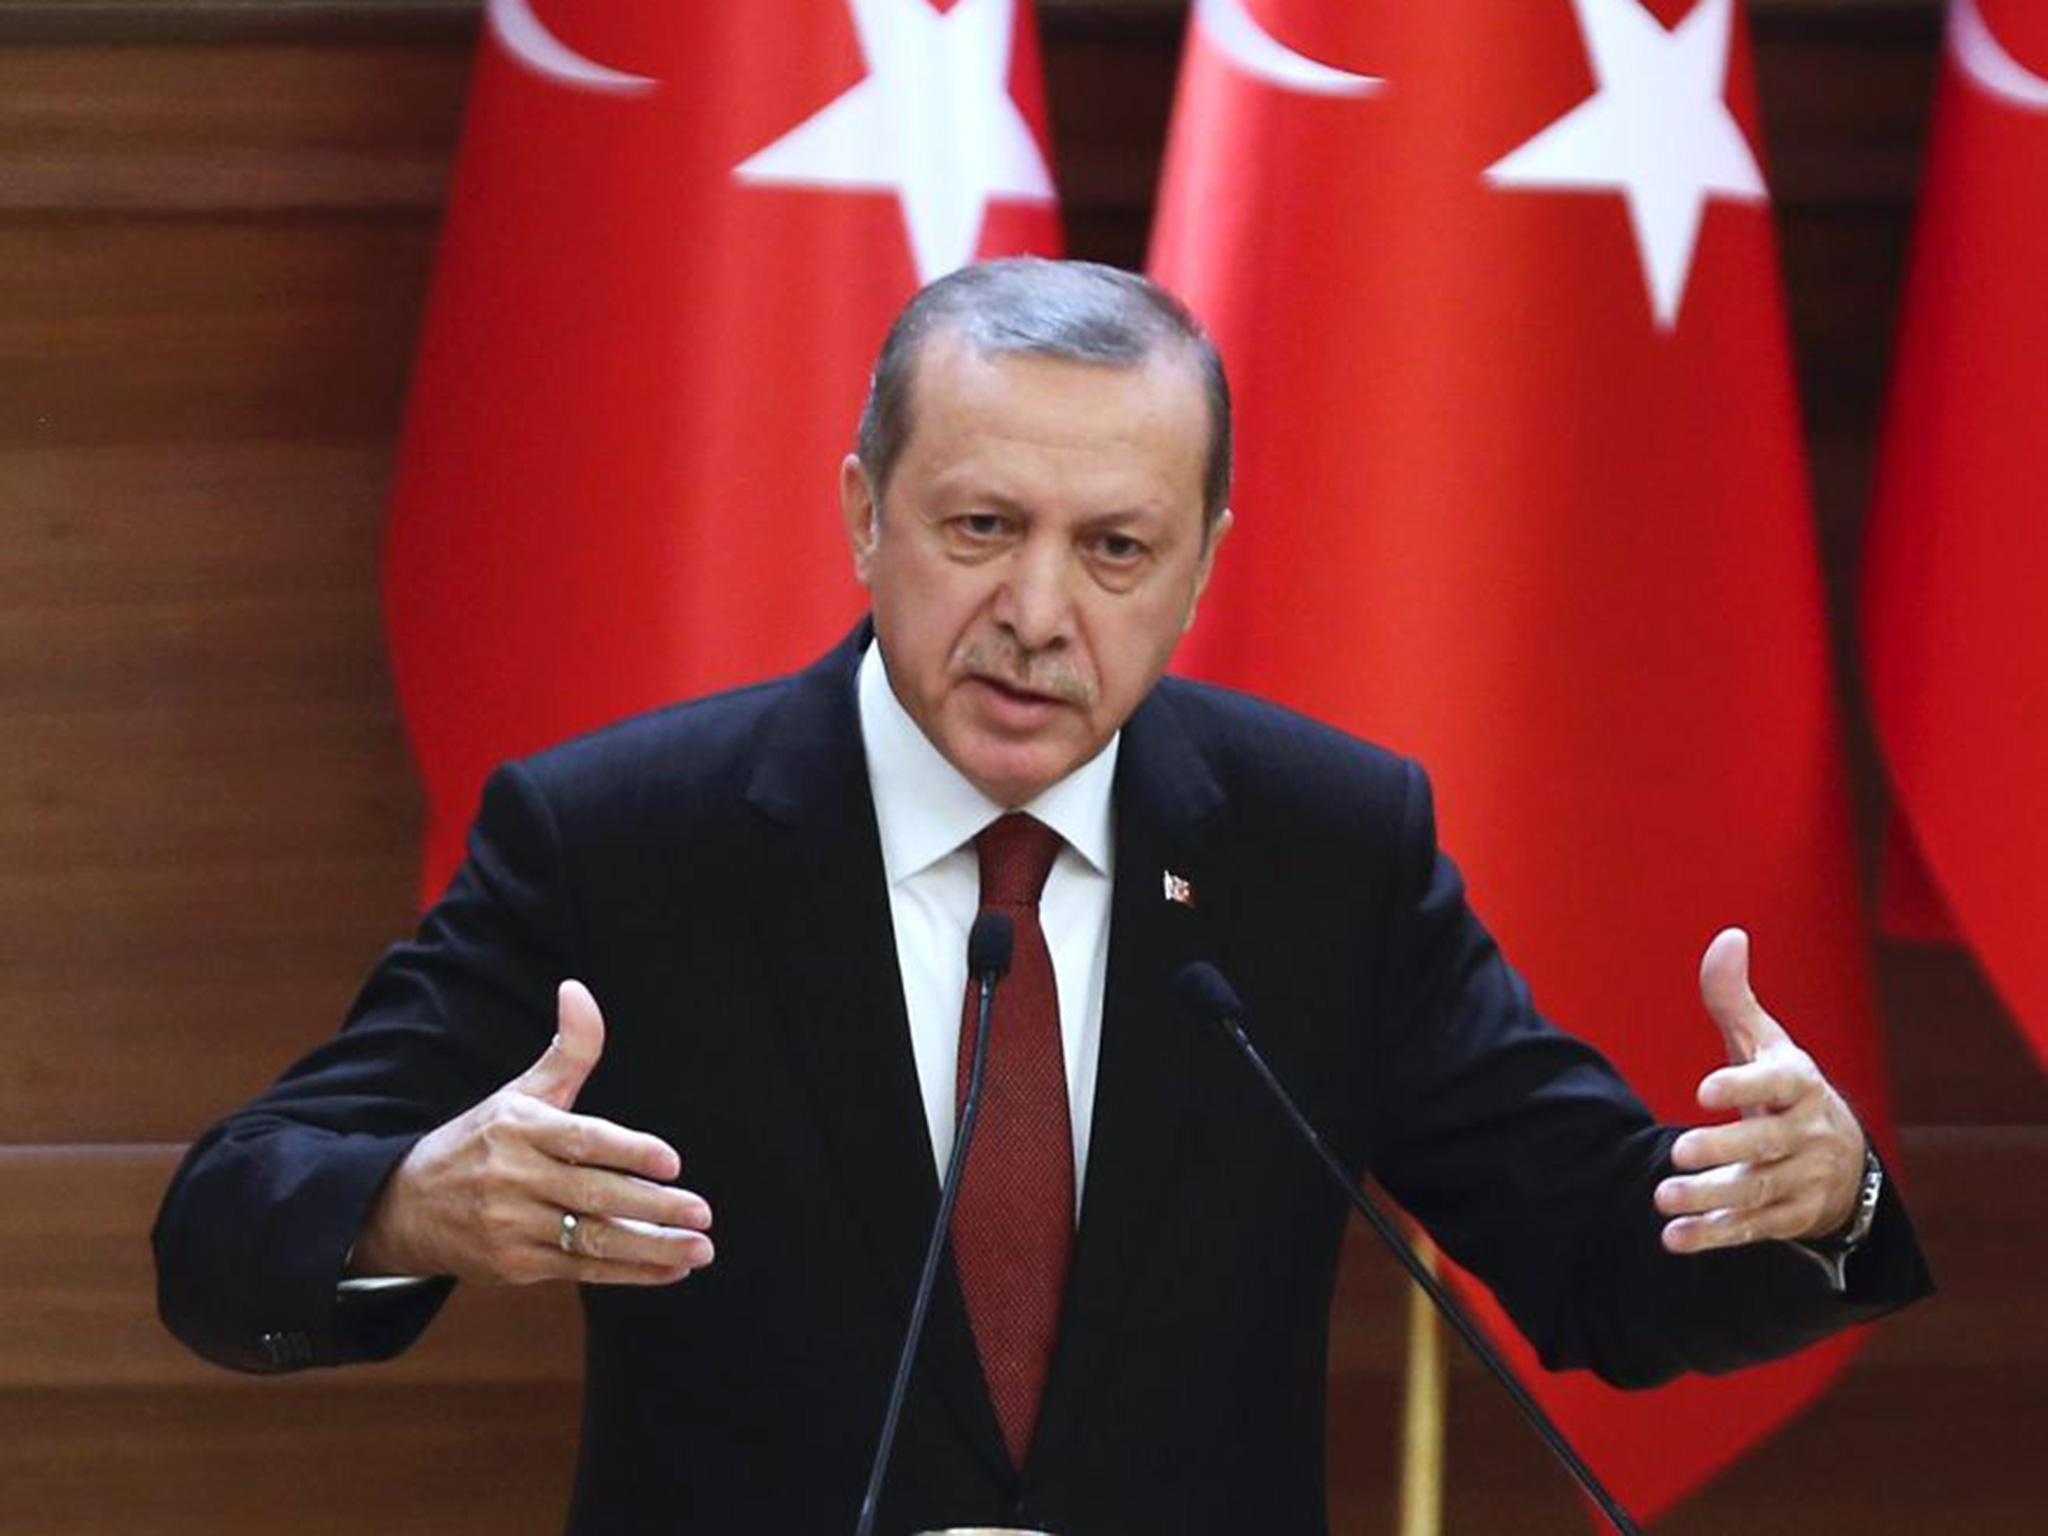 Erdogan calls the recent rates increase "treacherous"